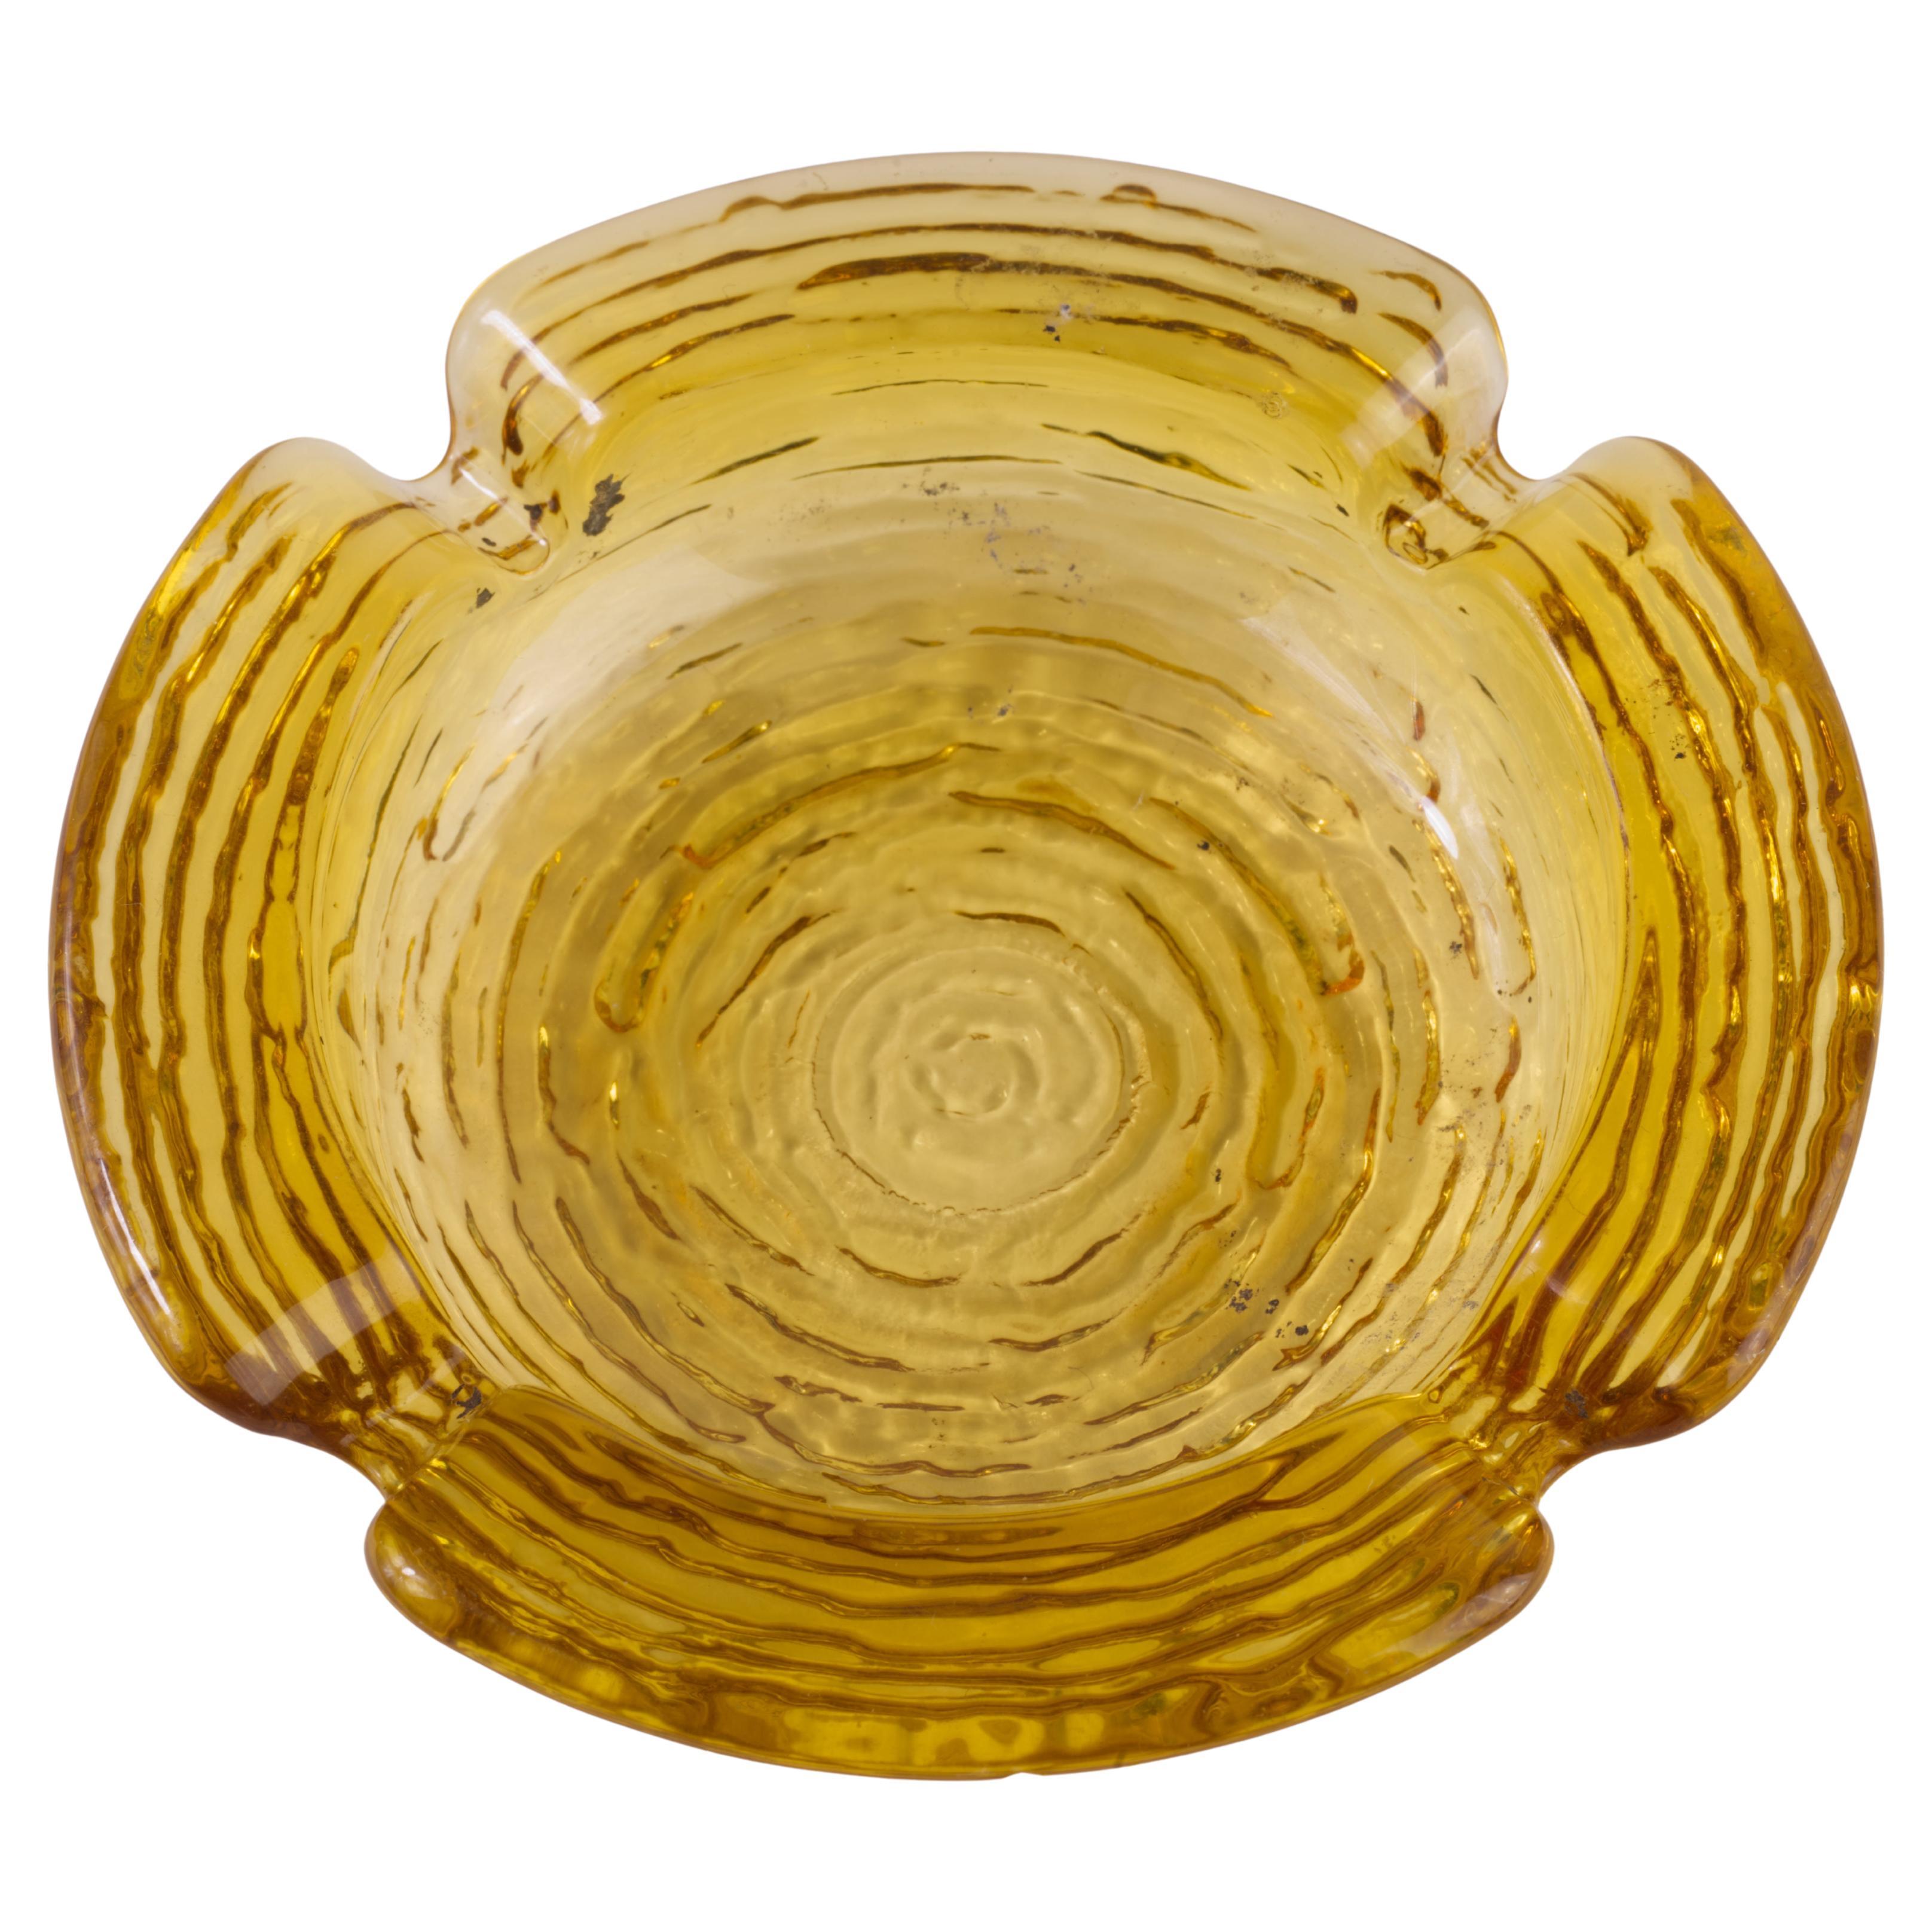 Anchor Hocking Soreno Textured Amber Glass Ashtray Harvest Gold For Sale